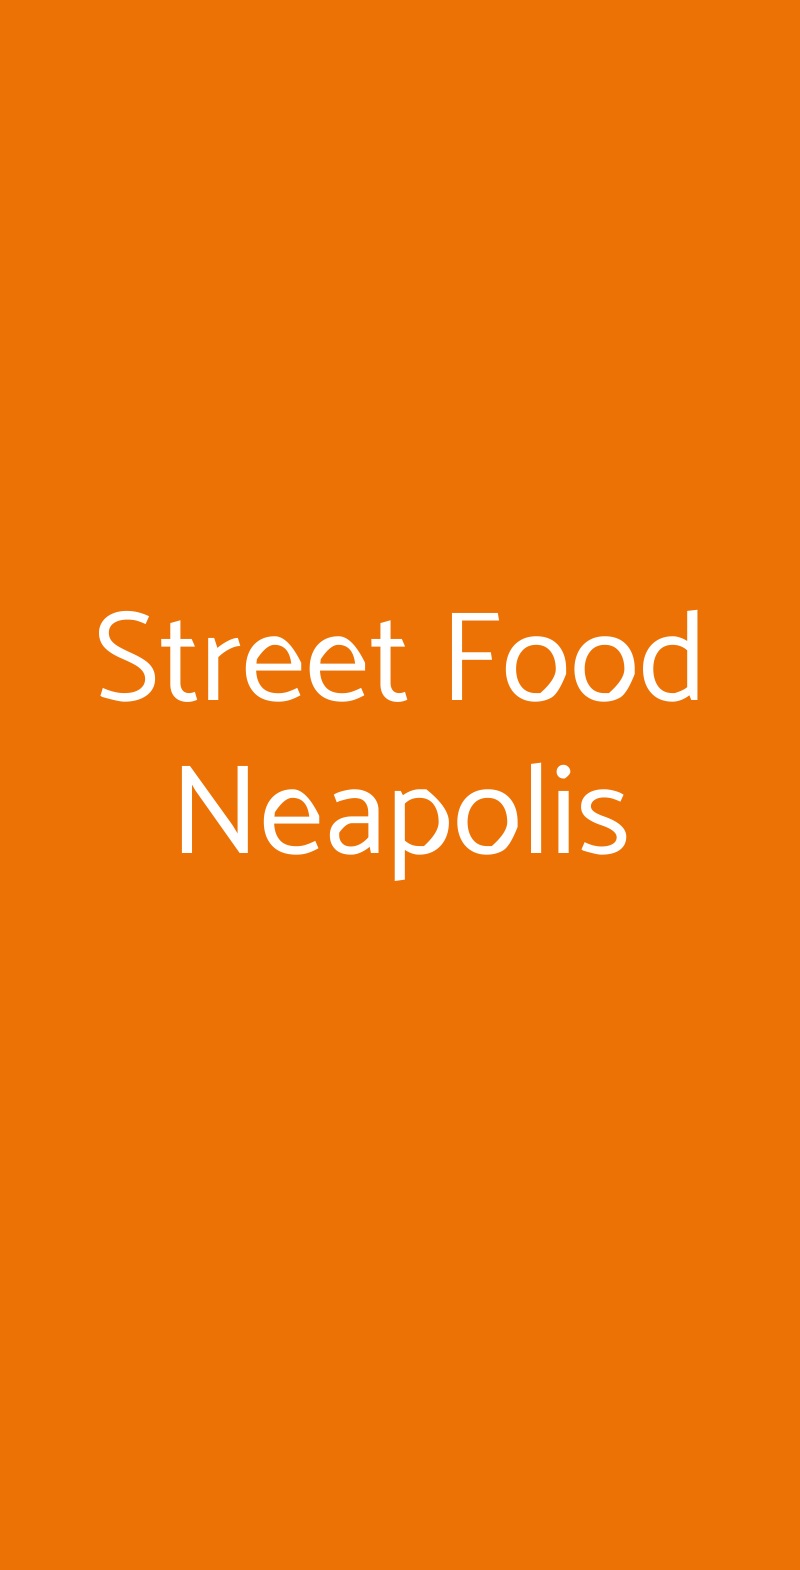 Street Food Neapolis Napoli menù 1 pagina